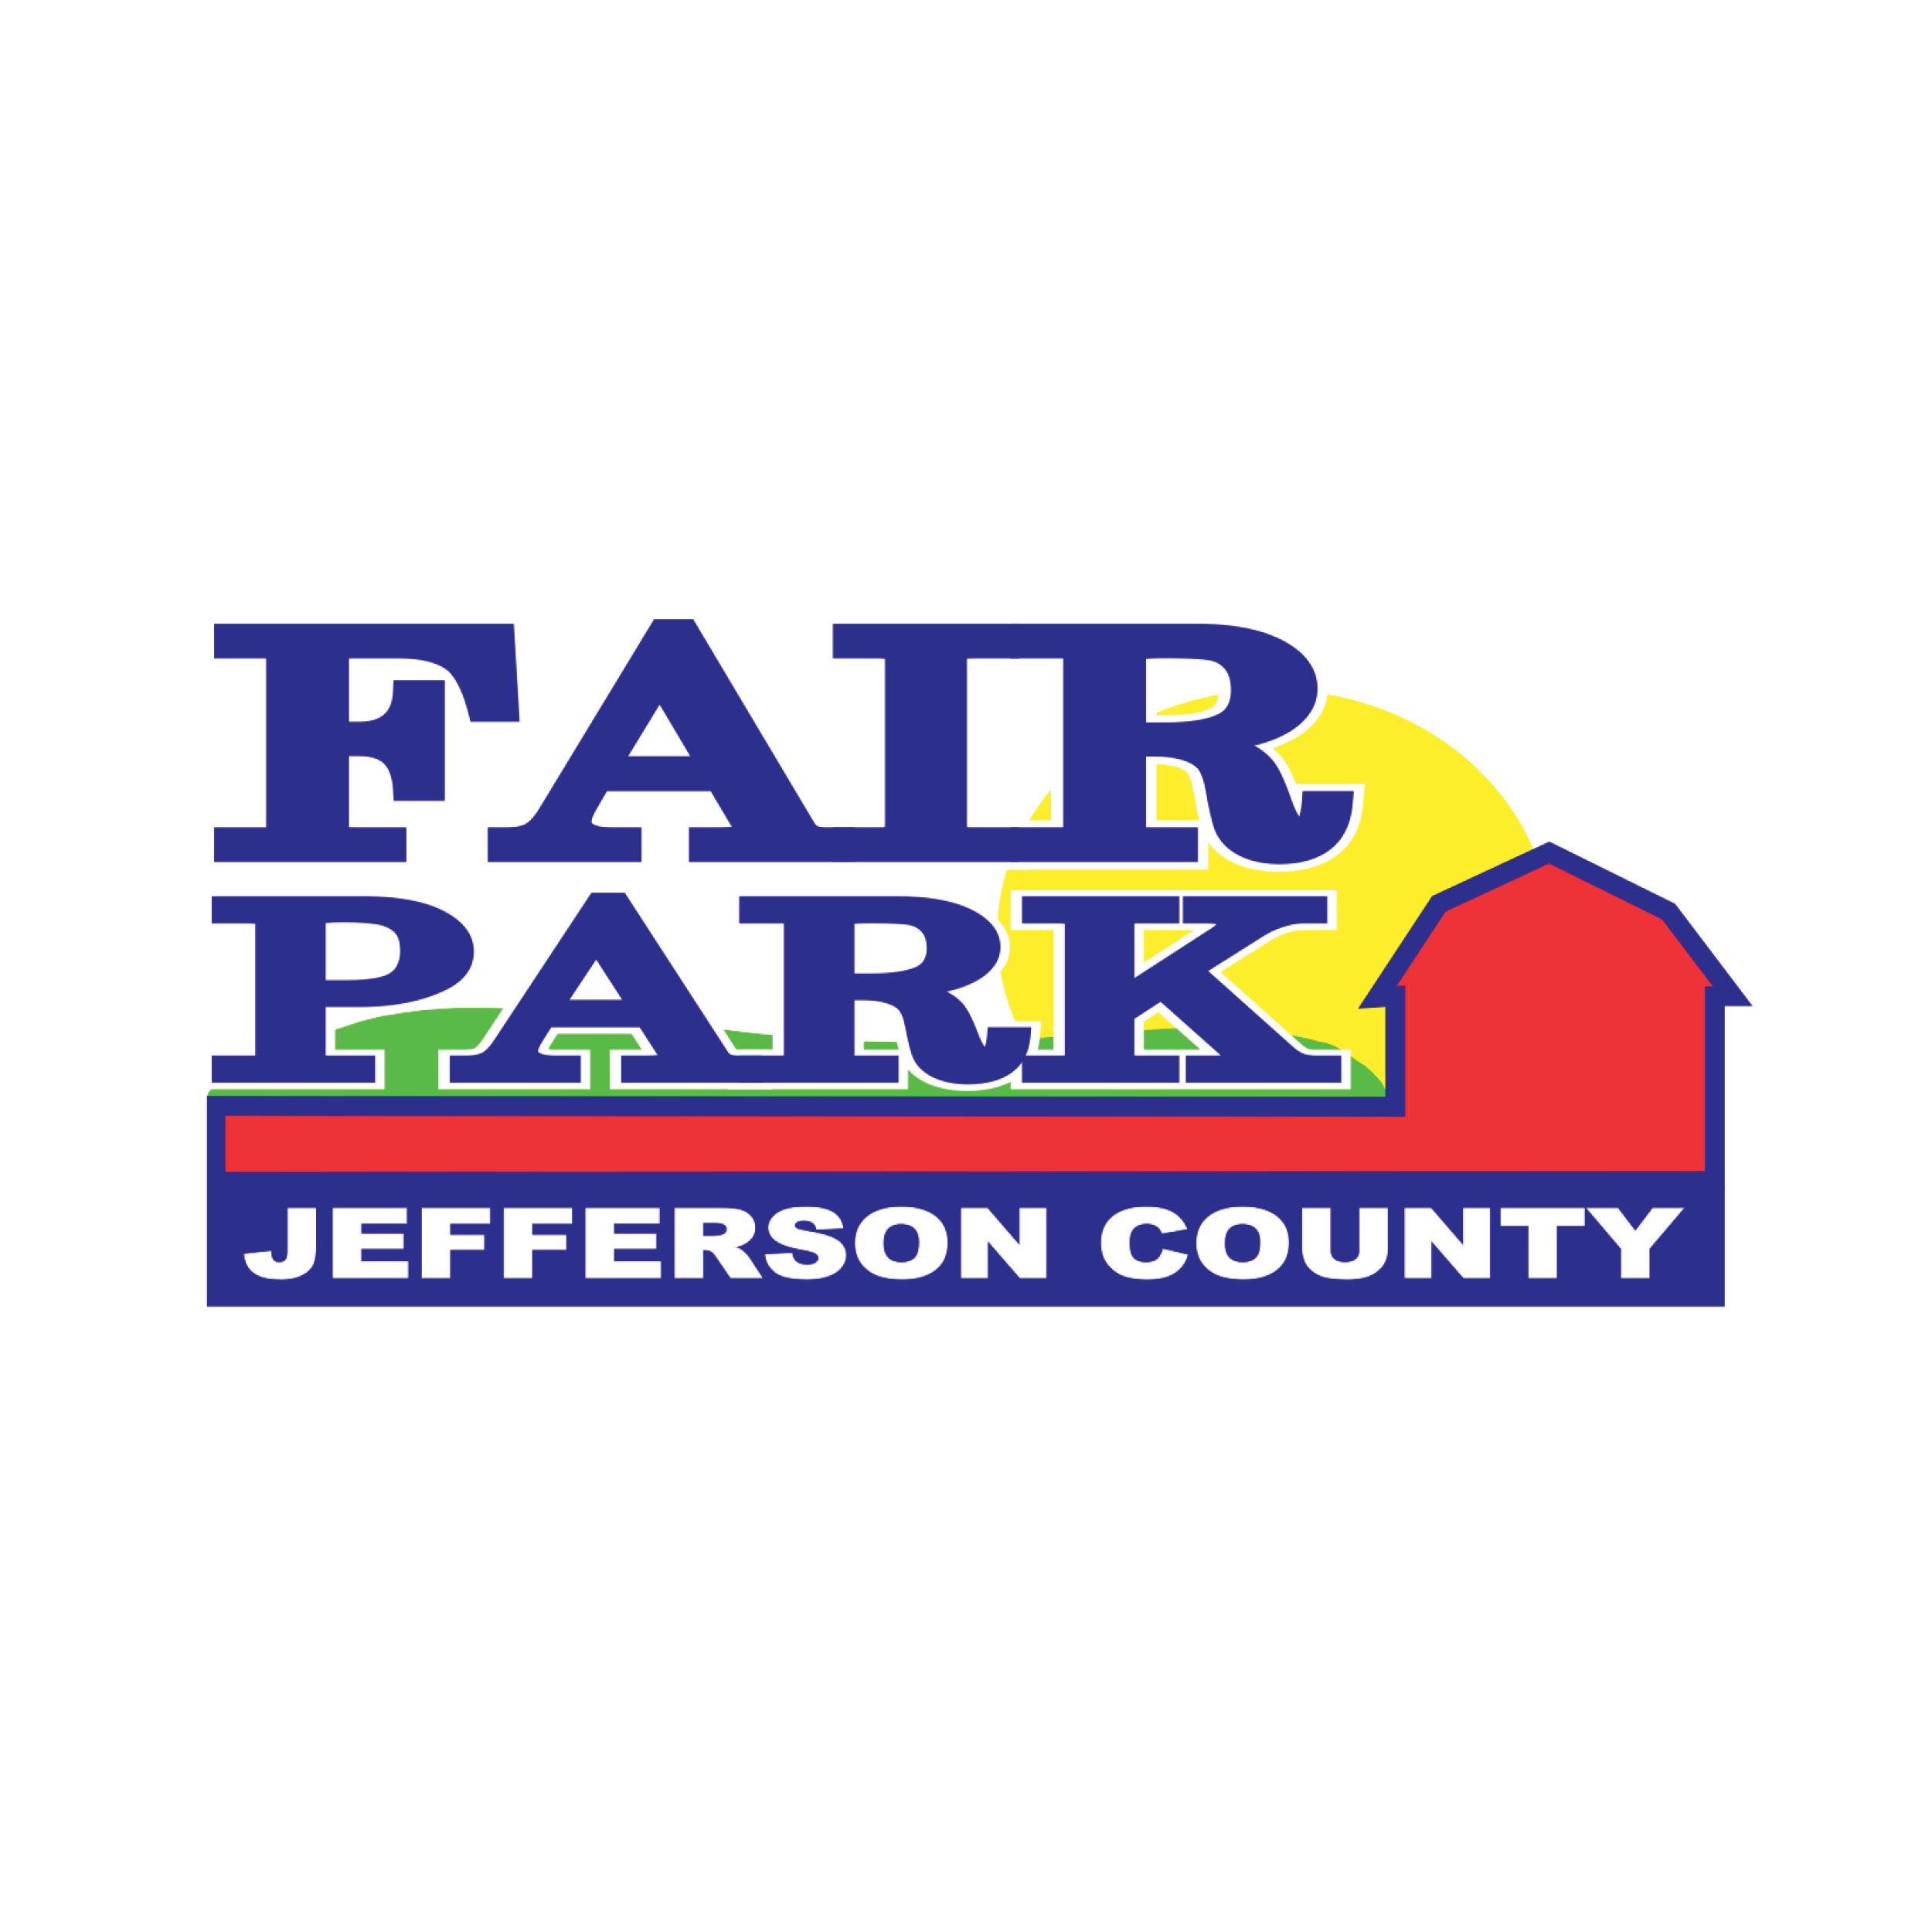 Jefferson County Fair